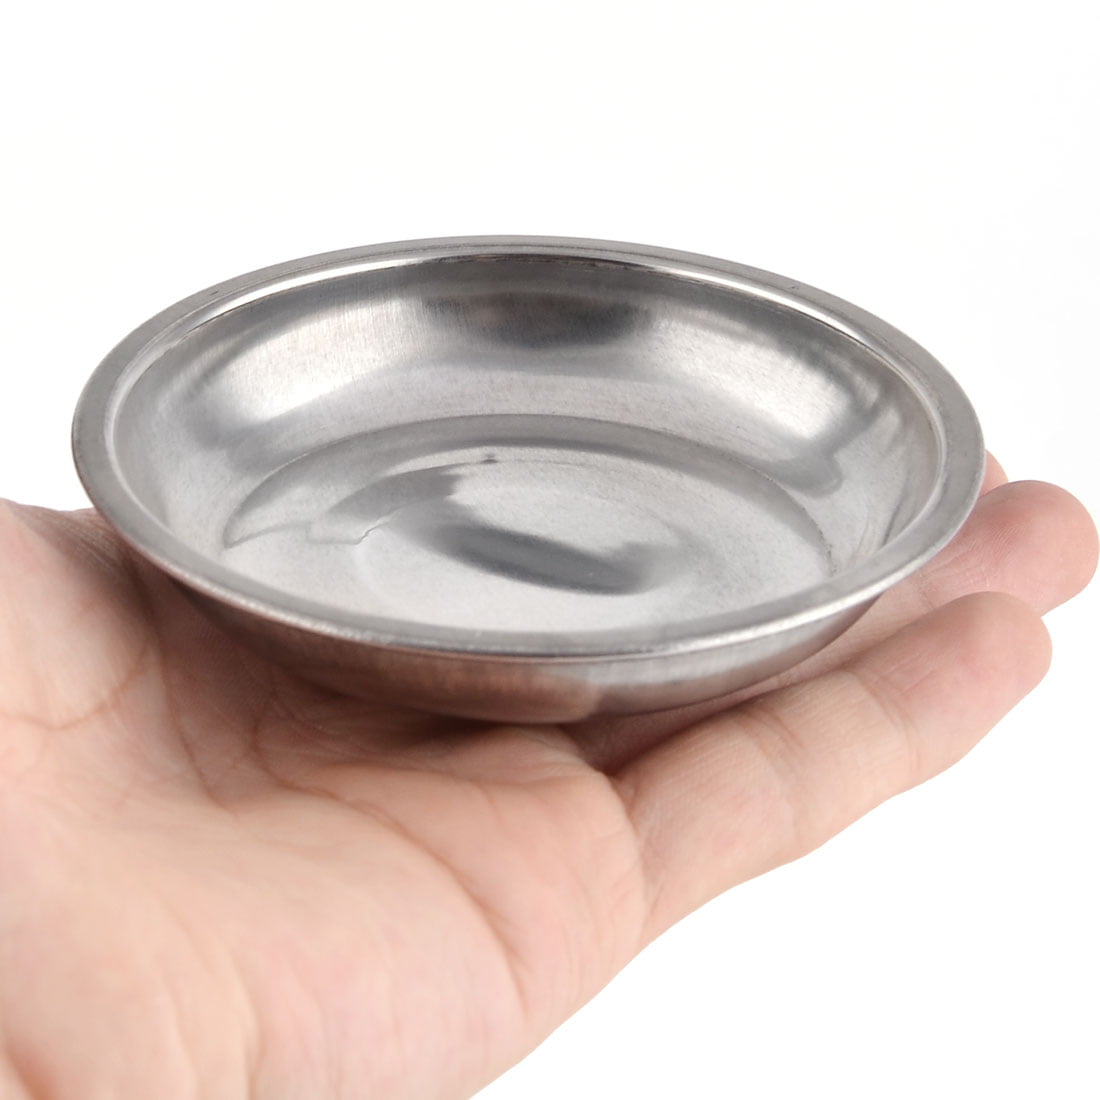 Metal Round Shaped Soy Sauce Spice Dish Silver Tone 9cm Diameter 10 Pcs 